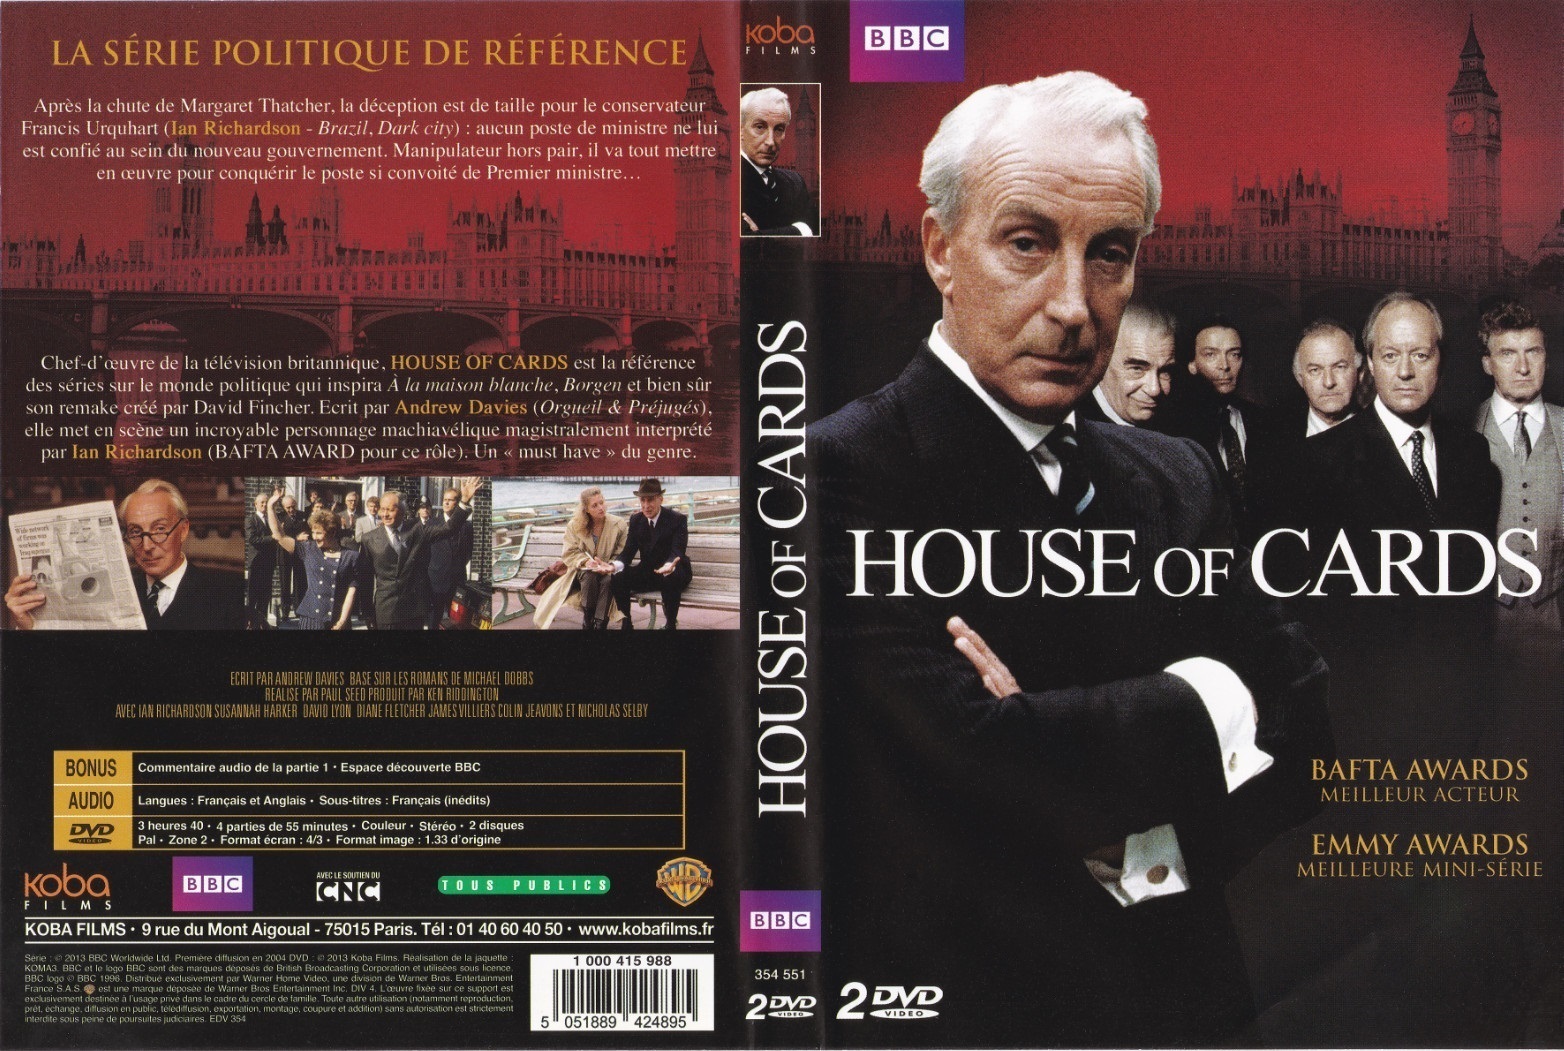 Jaquette DVD House of Cards Saison 1 (UK)